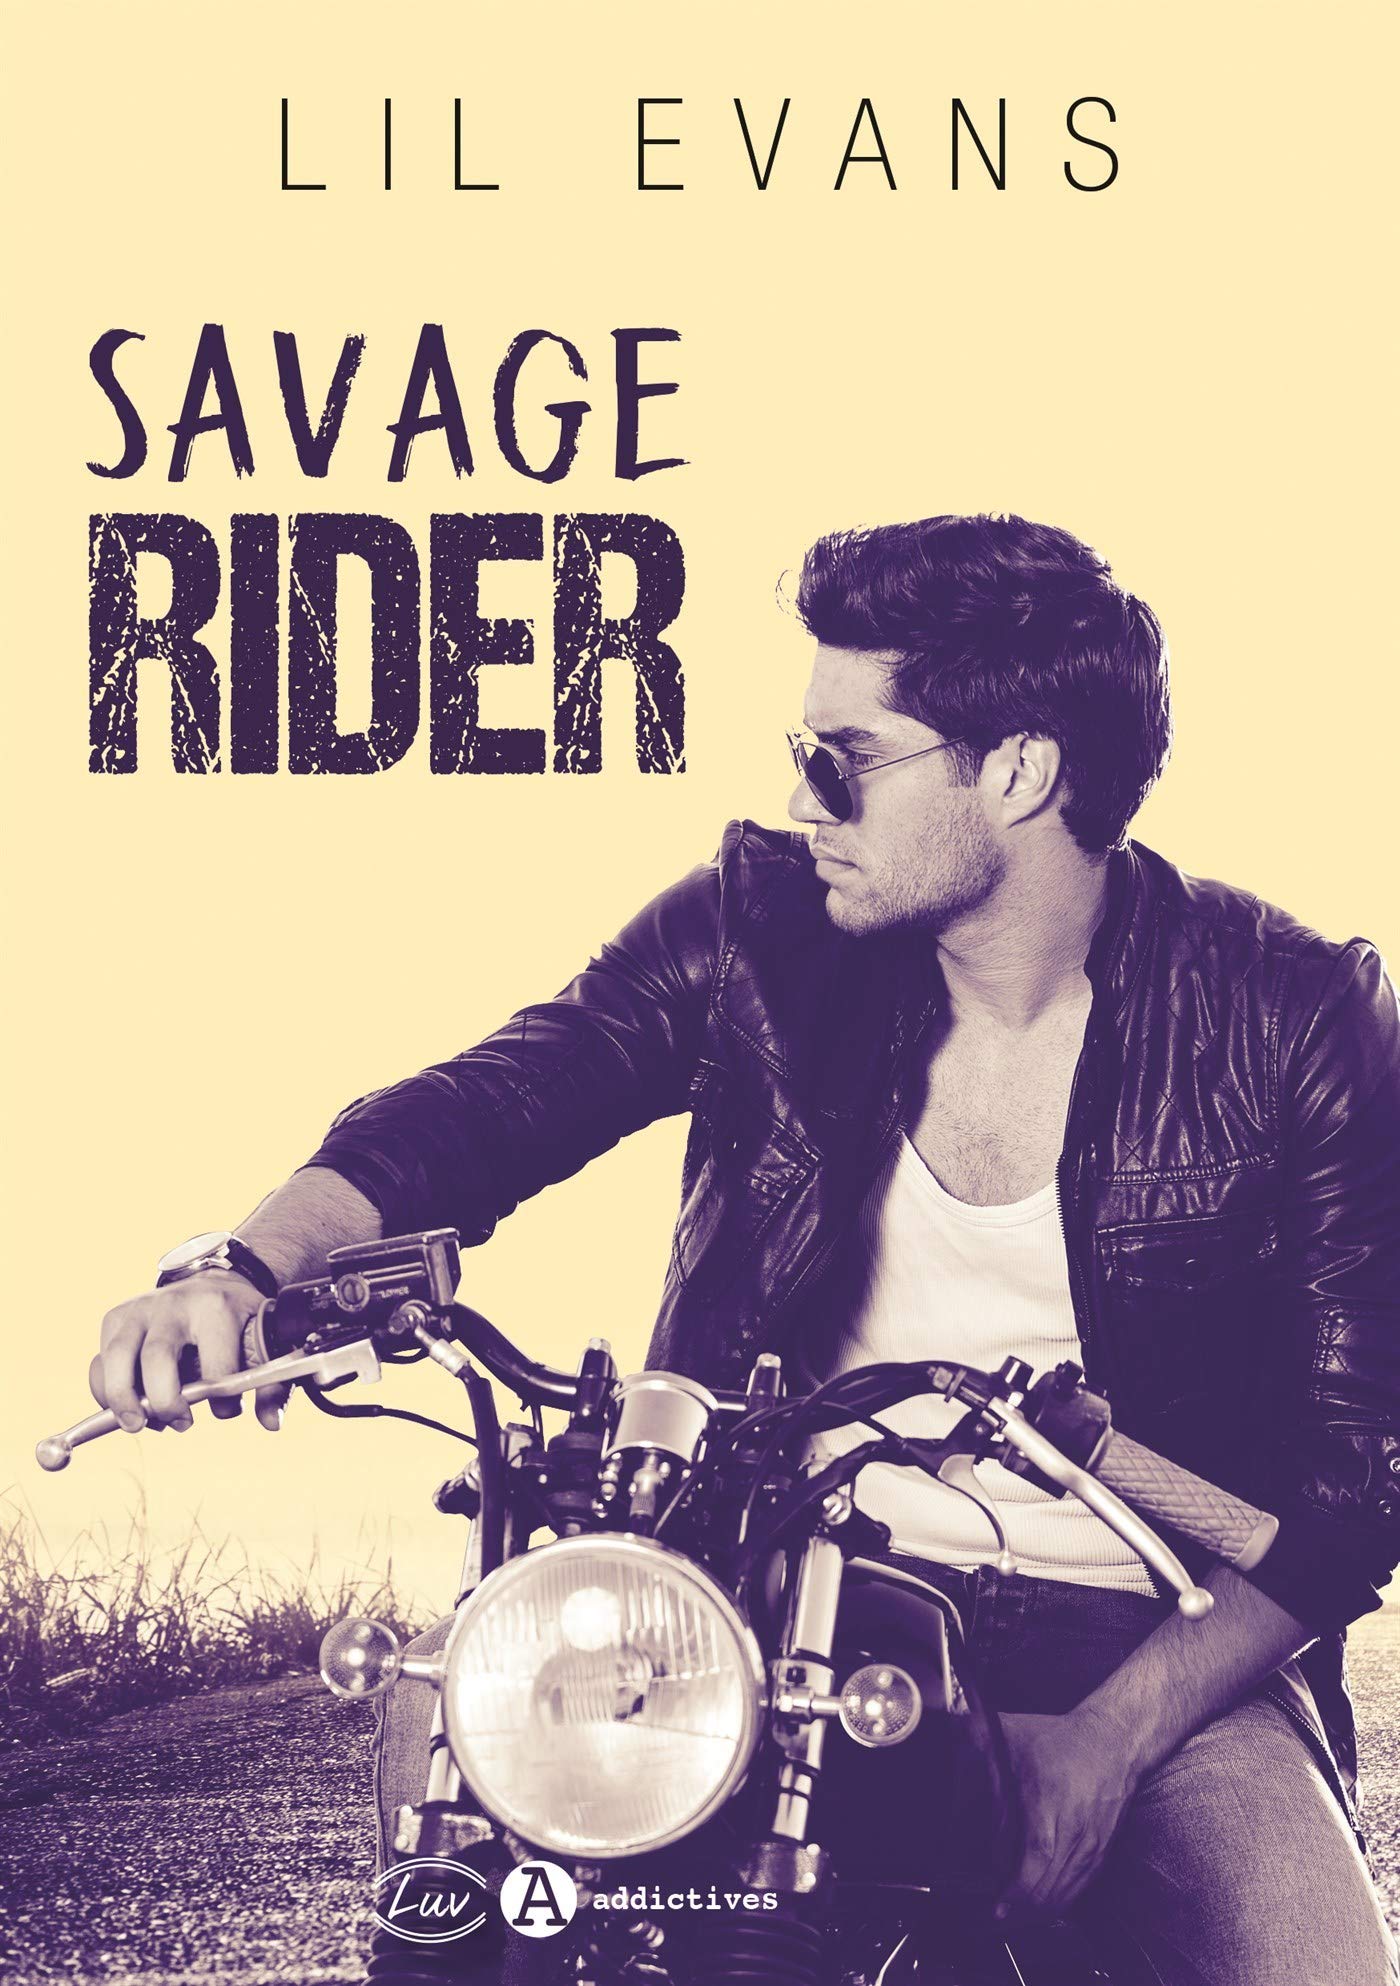 Savage Rider - Lil Evans